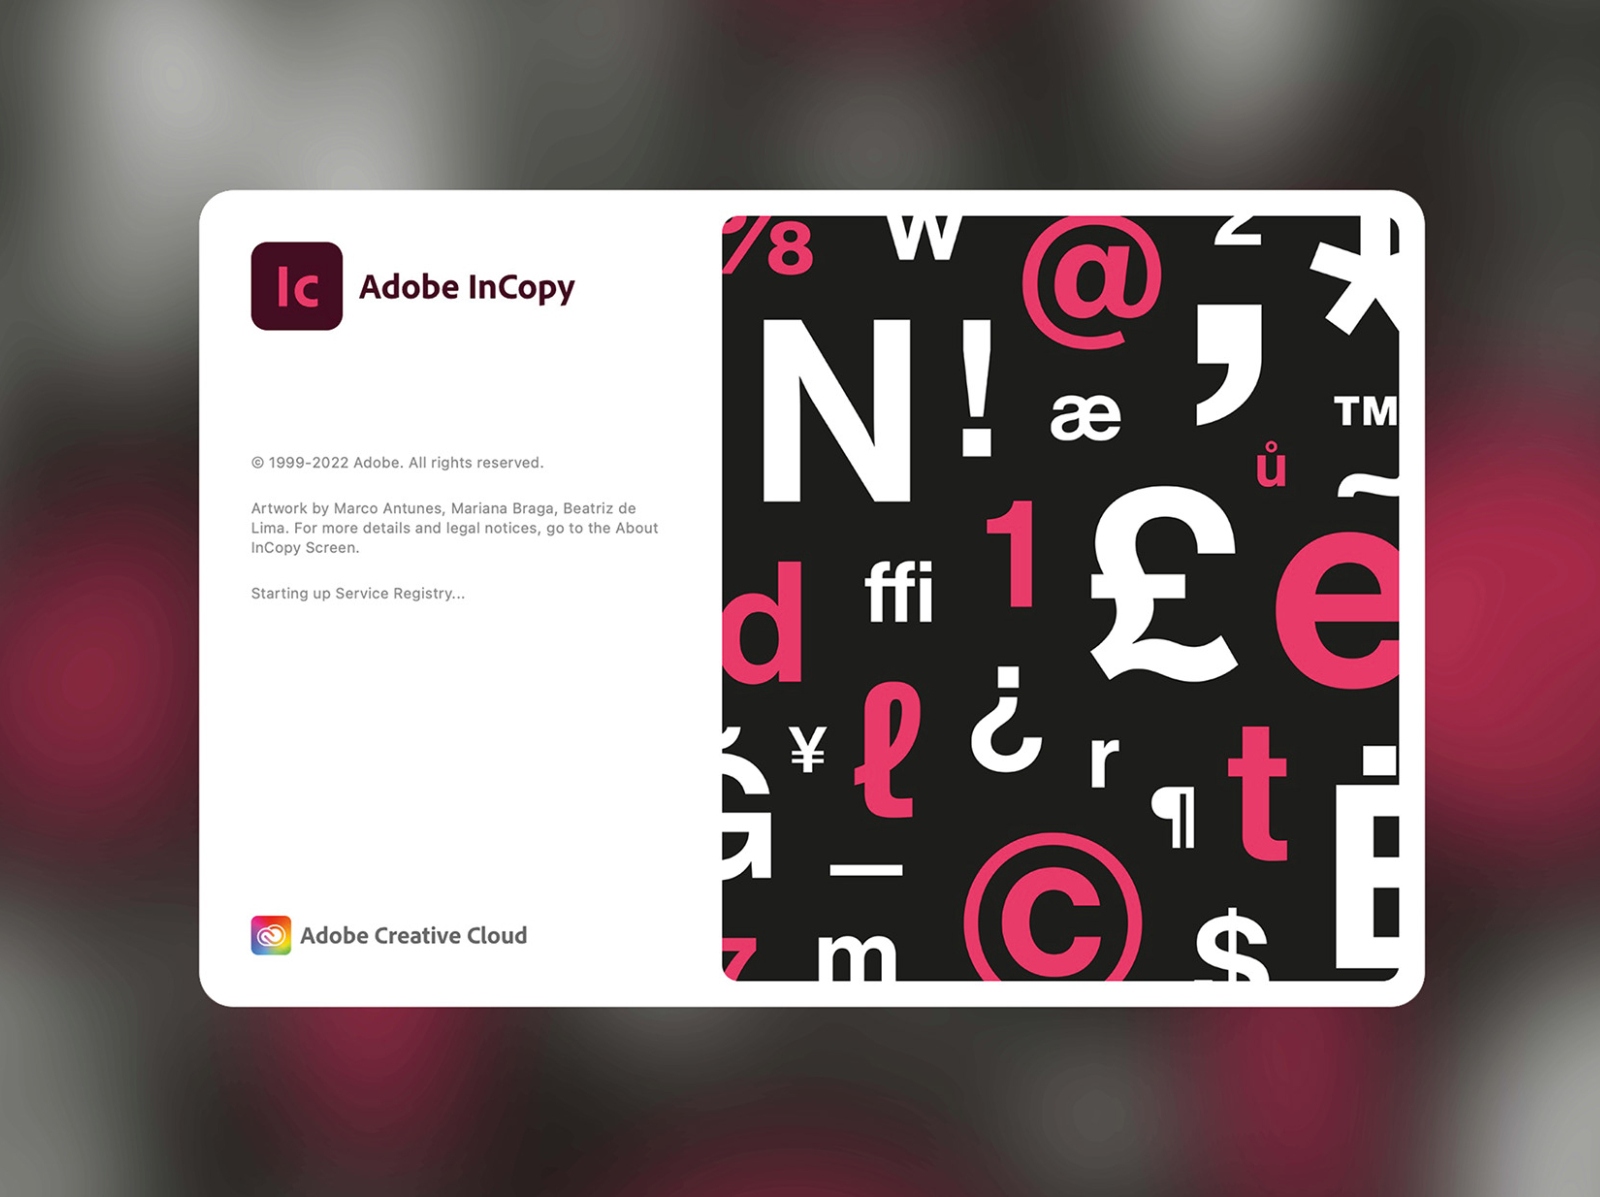 Adobe InCopy 2023 v18.4.0.56 free downloads